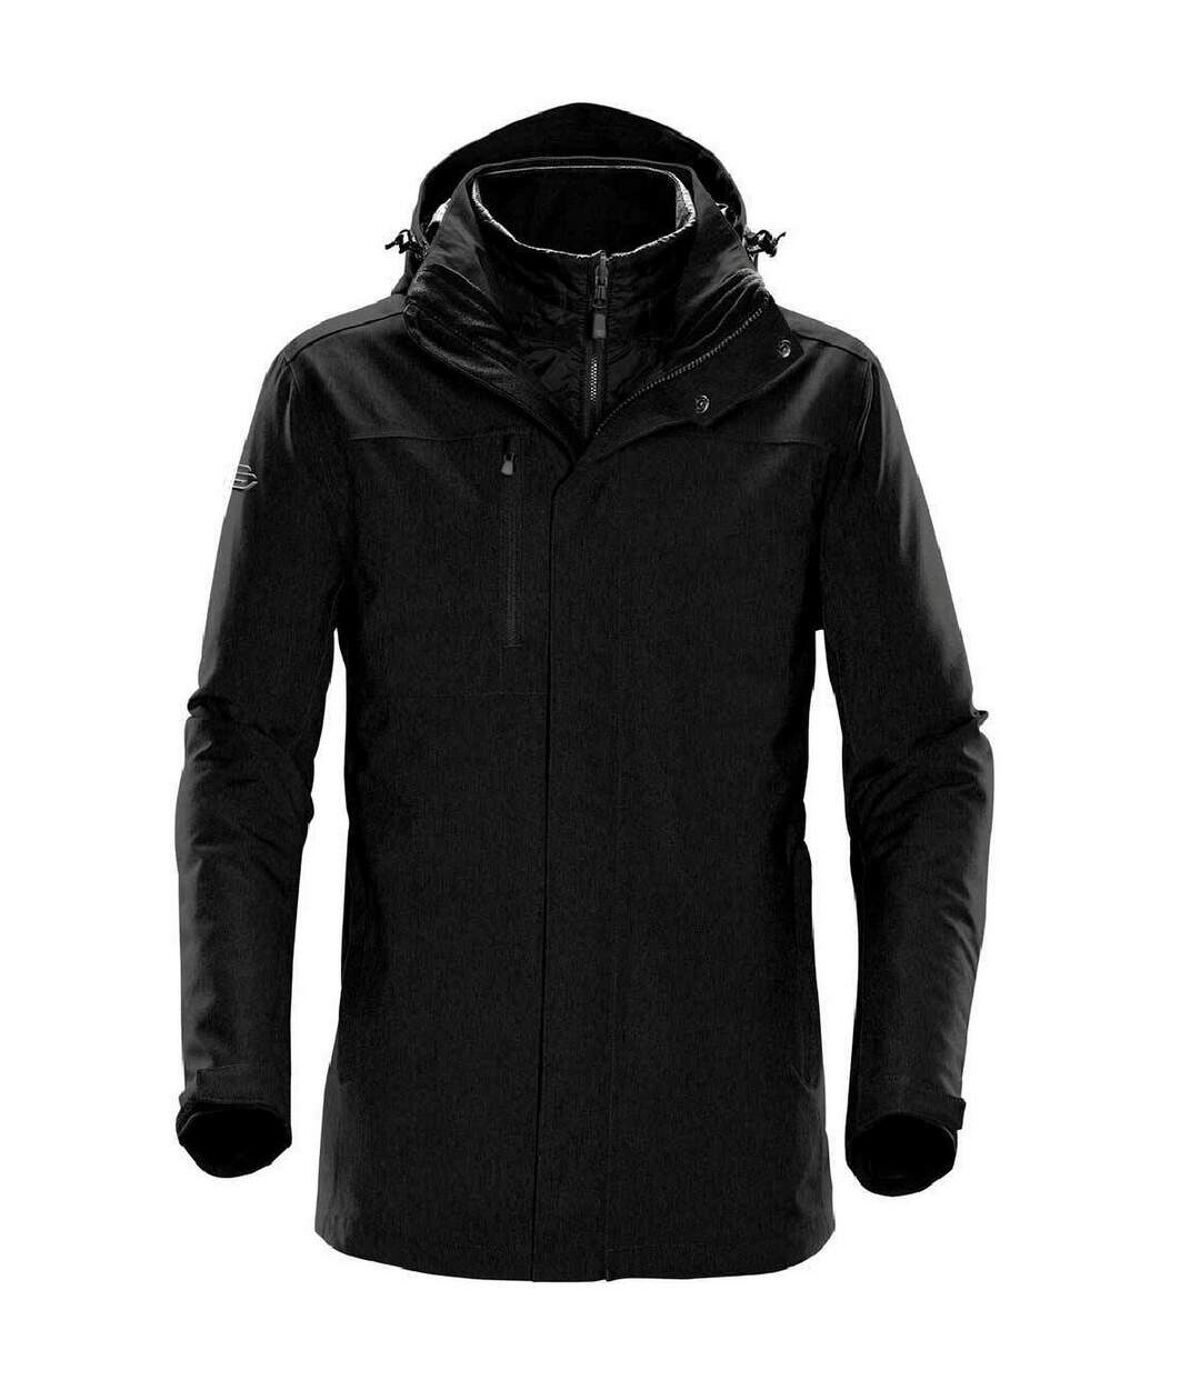 Stormtech Mens Avalanche System Jacket (Black) - UTBC4117